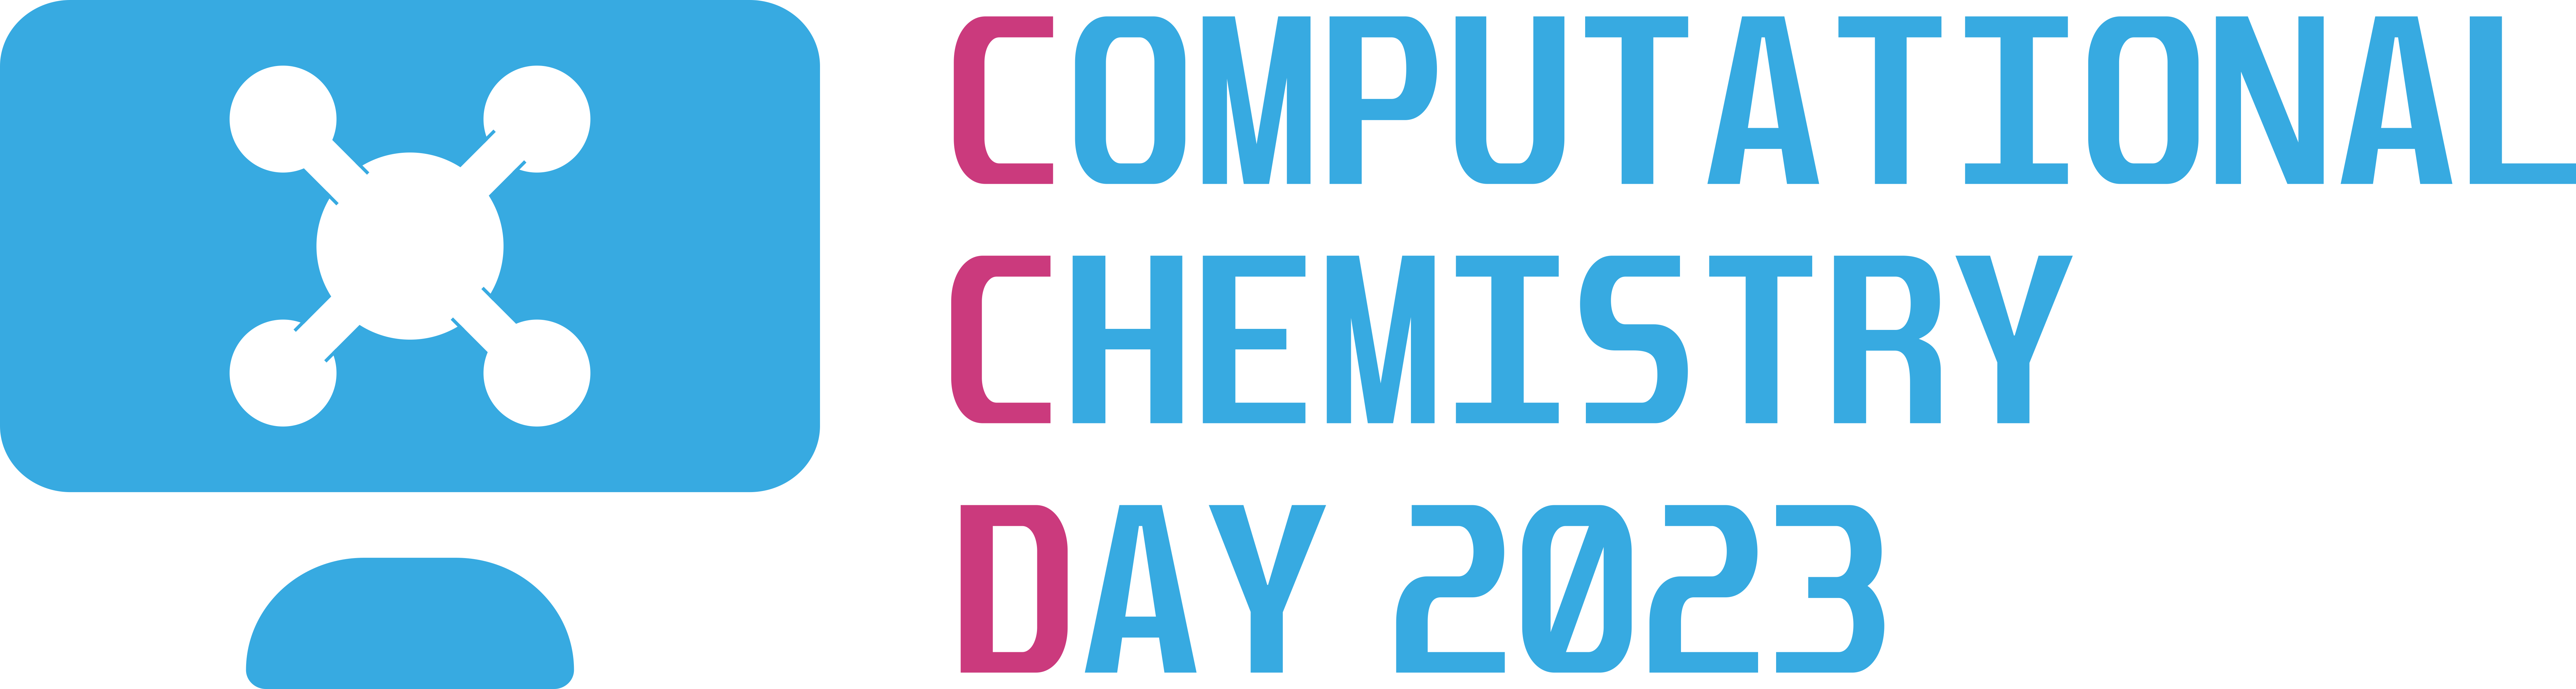 Computational Chemistry Day 2023 Logo